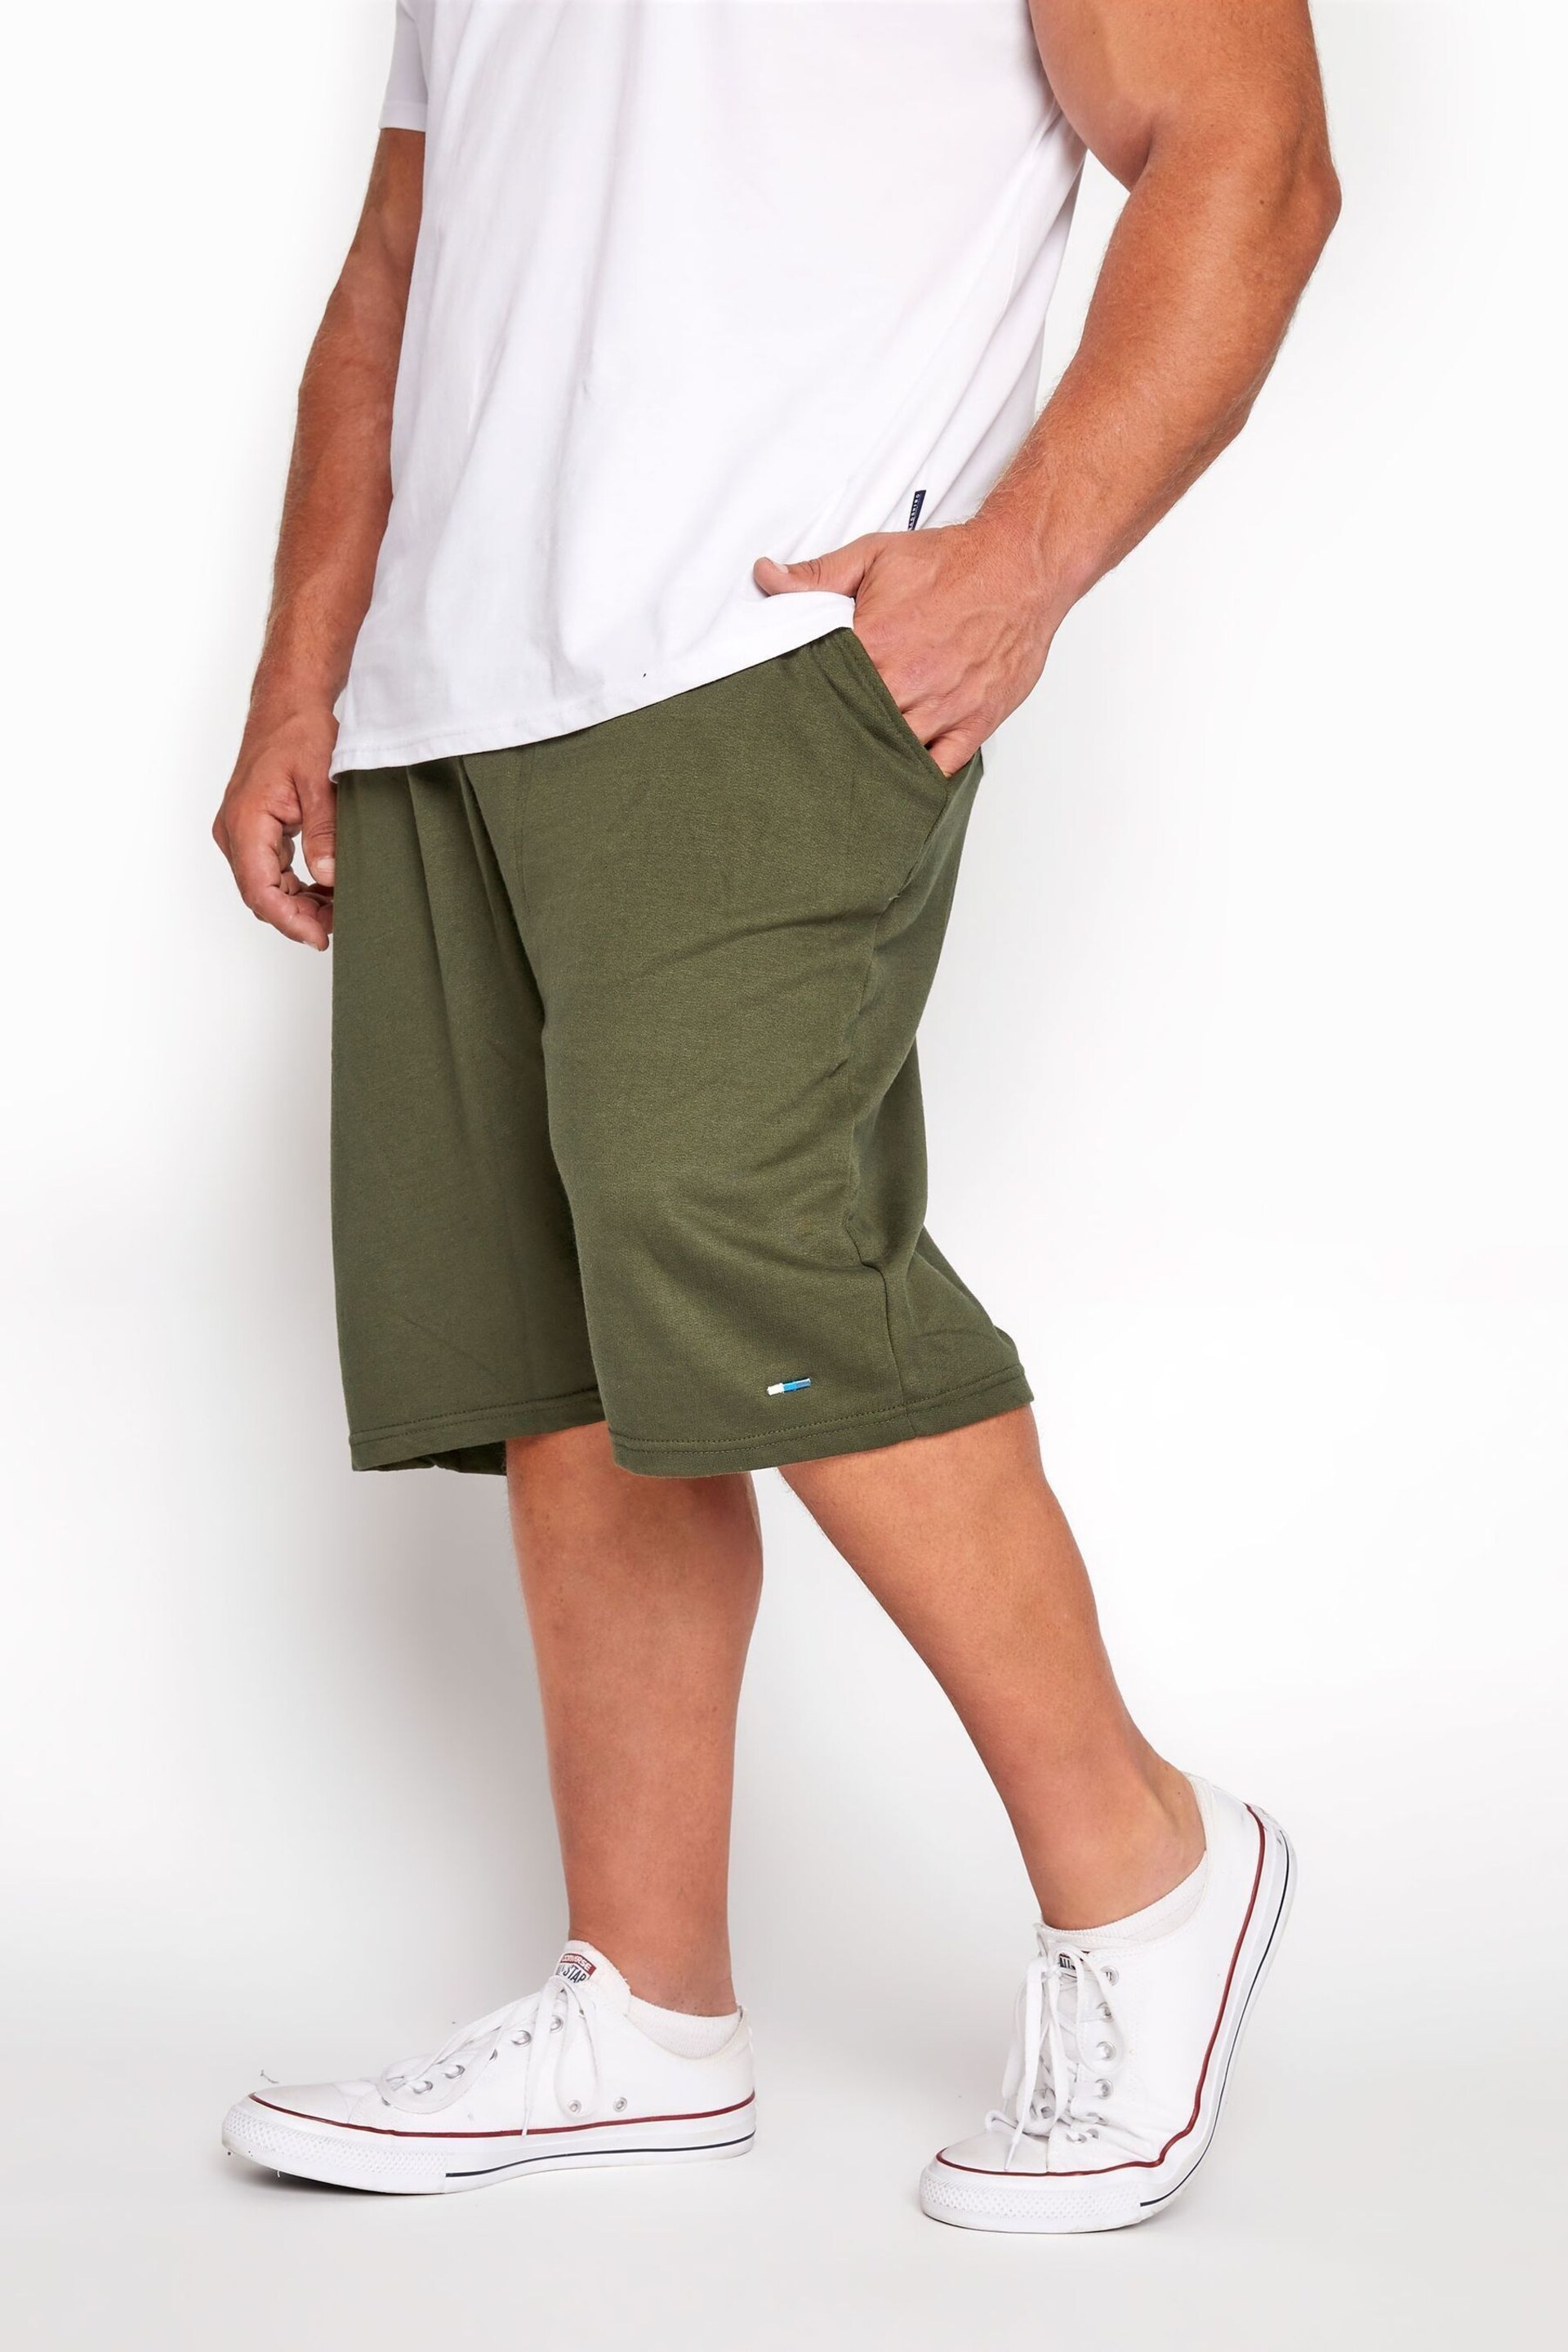 BadRhino Big & Tall Green Jersey Shorts - Image 2 of 4